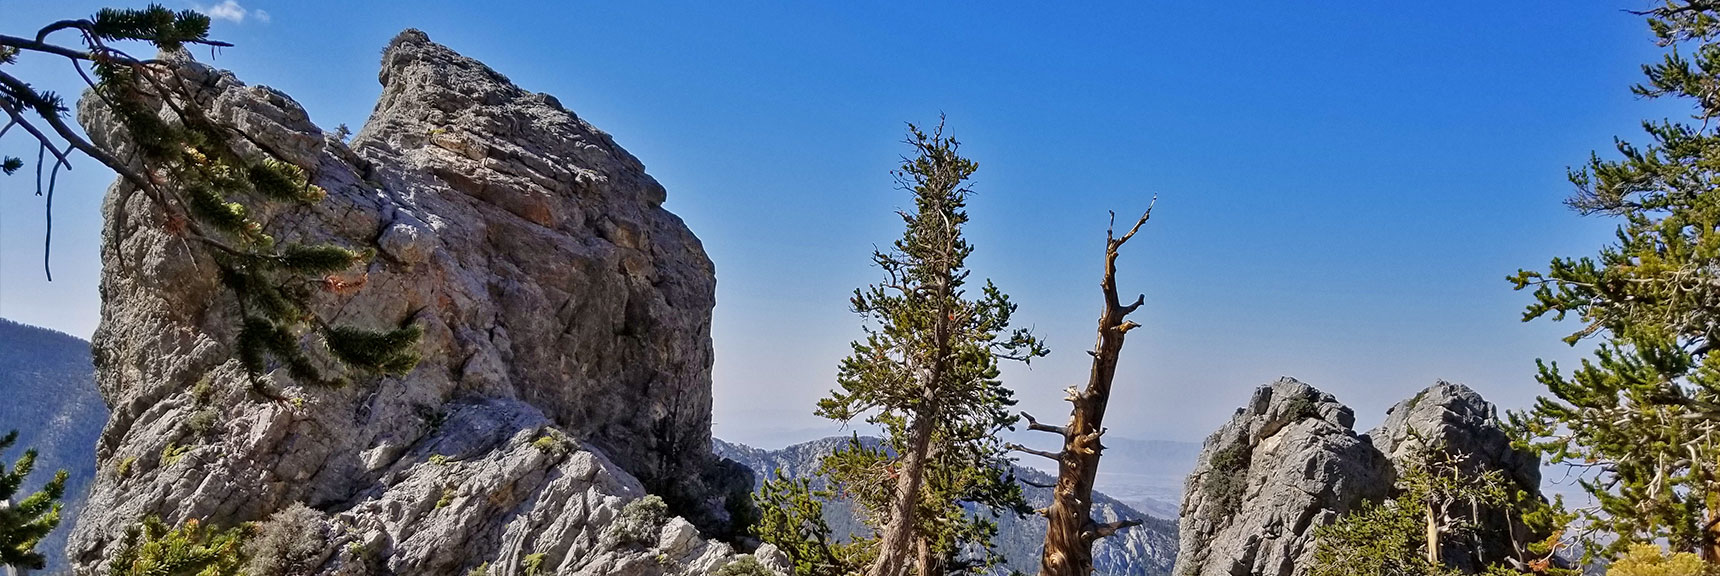 Artistic Rock Formations on Bonanza Trail Rounding McFarland Peak | Bonanza Peak from Lee Canyon via the Lower Bristlecone Pine Trail and Bonanza Trail | Spring Mountains, Nevada